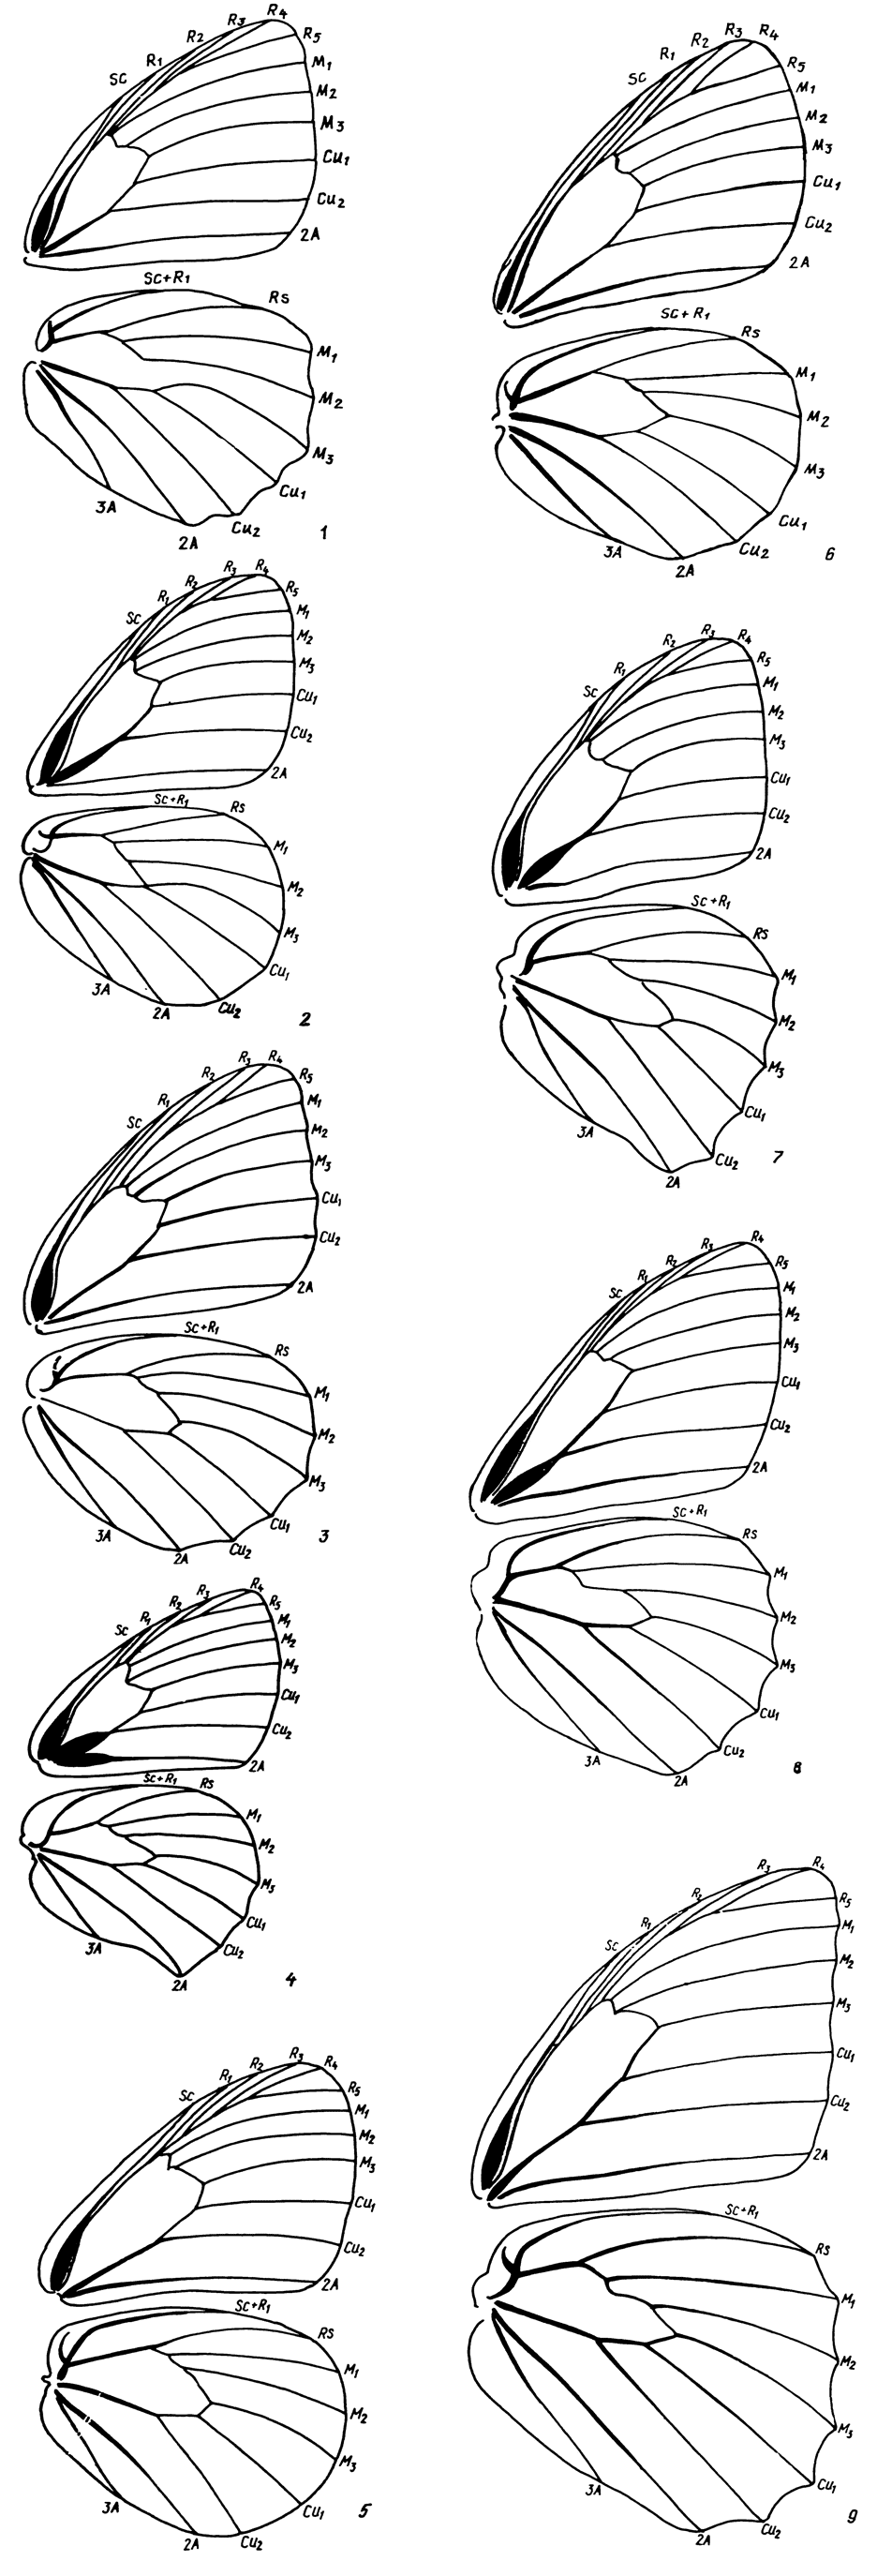 . 44.       Satyridae: 1 - Esperarge climene (Esp.) (Lethinae), 2 - Lasiommata megera (L.) (Lethinae), 3 - Melaneigia galathea (L.) (Melanargiinae), 4 - Coenonympha pamphilus (L.) (Coenonymphinae), 5 - Proterebia afra (F.), 6 - Erebia aethiops (Esp.) (Erebiinae), 7 - Maniola jurtina (L.) (Satyrinae), 8 - Hipparhia pellucida (Stdr.) (Satyrinae), 9 - Brintesia circe (F.) (Satyrinae)